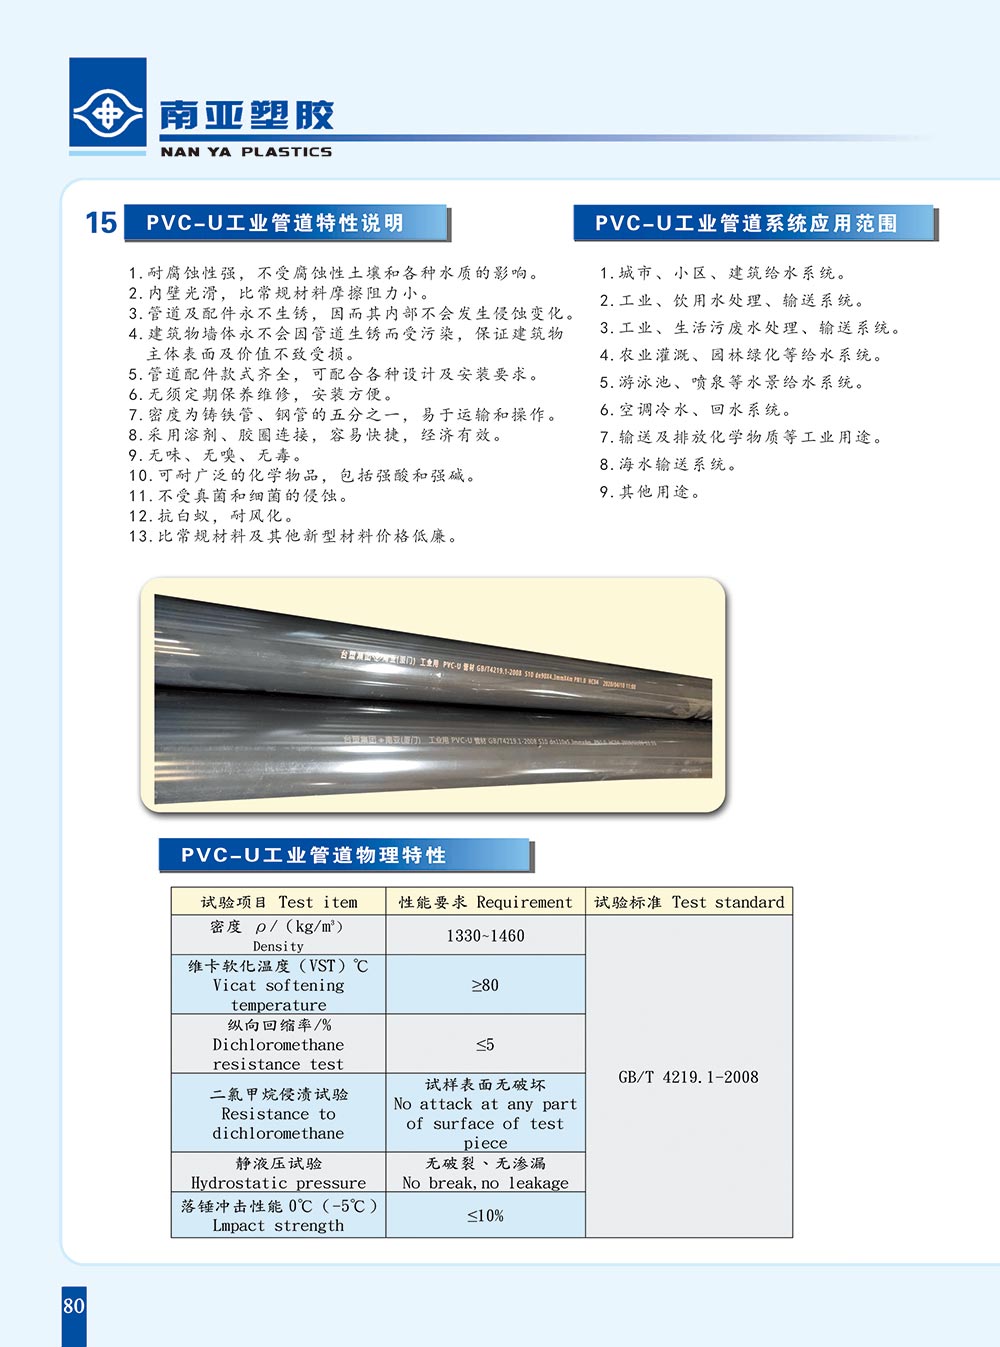 PVC-U化工管材特性及物理性能-1.jpg